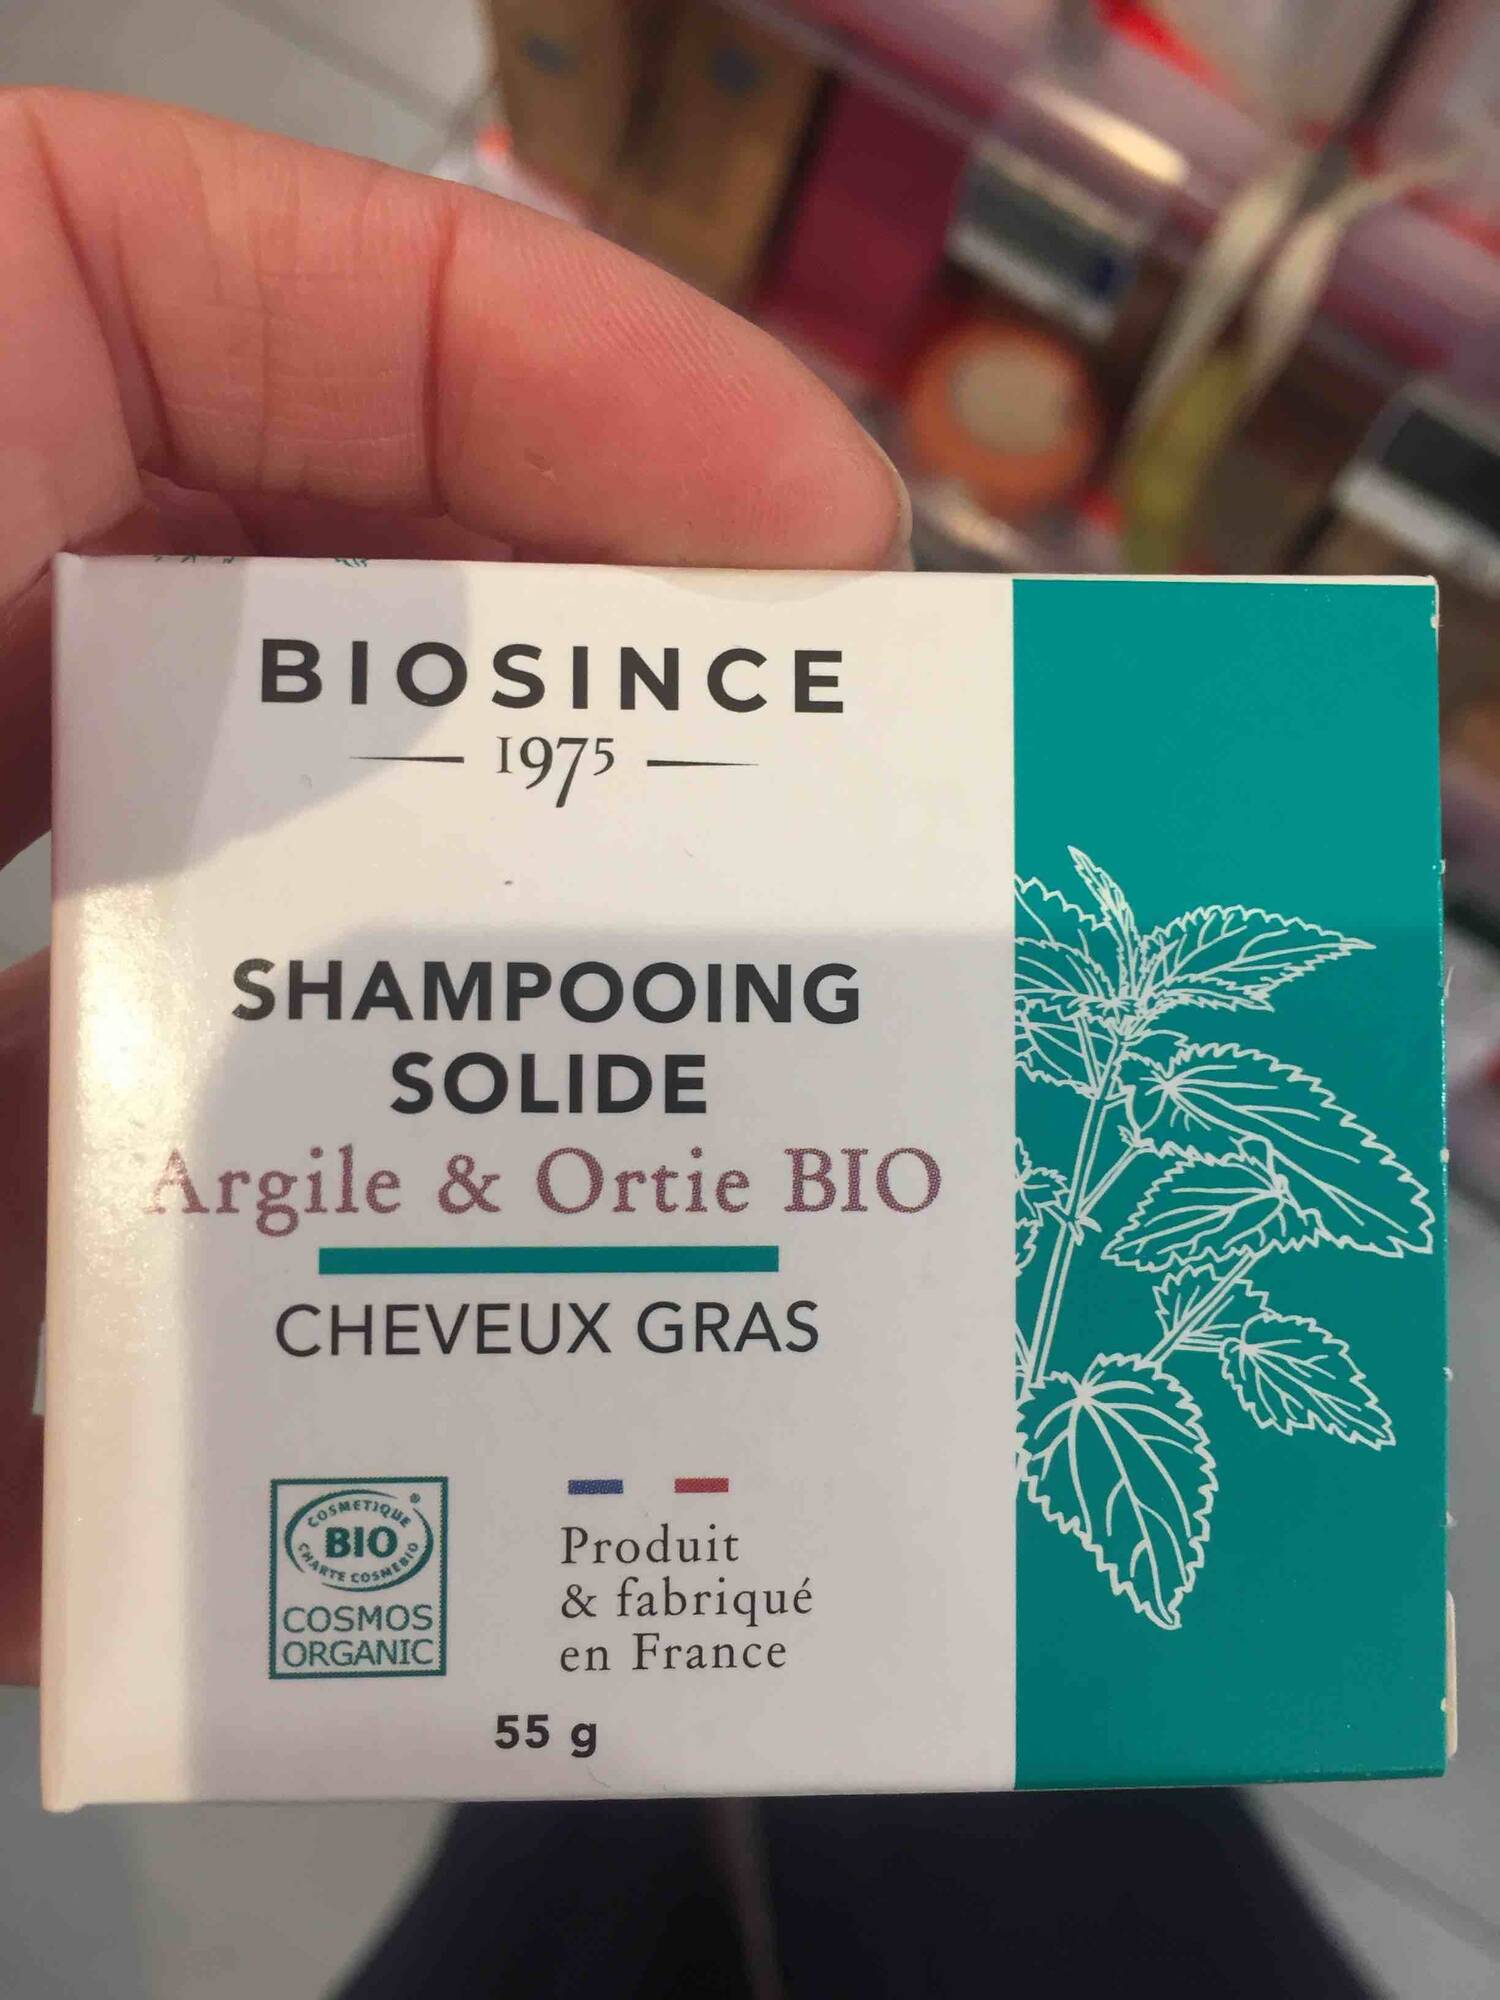 BIO SINCE 1975 - Argile & Ortie Bio - Shampooing solide 